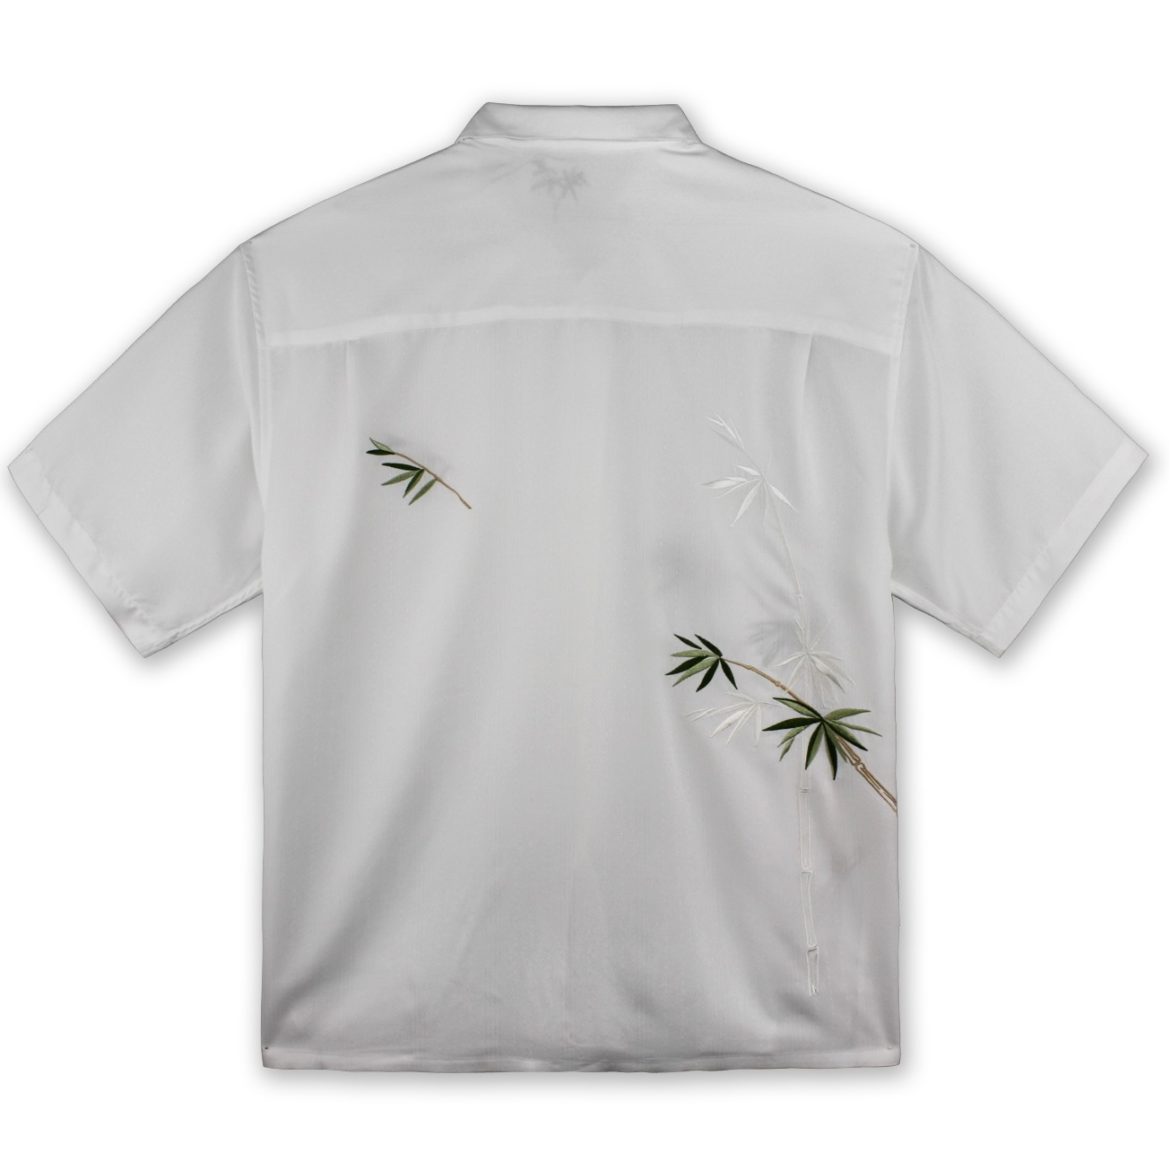 bamboo-cay-mens-tropical-resort-shirt-flying-bamboo-white-back-view